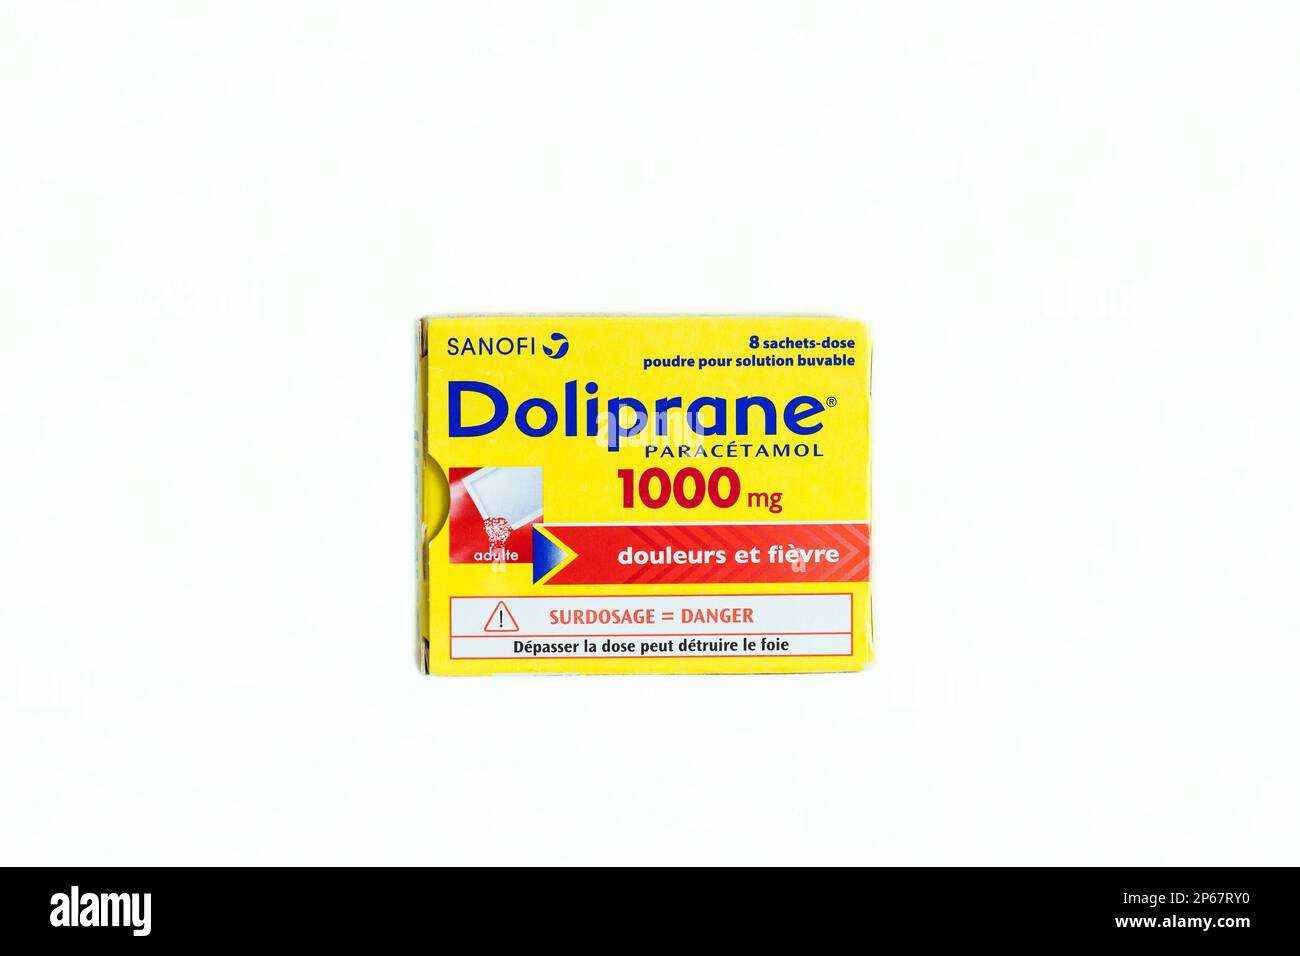 Doliprane 1000 mg from Sanofi, Paracetamol tablets painkiller Stock Photo